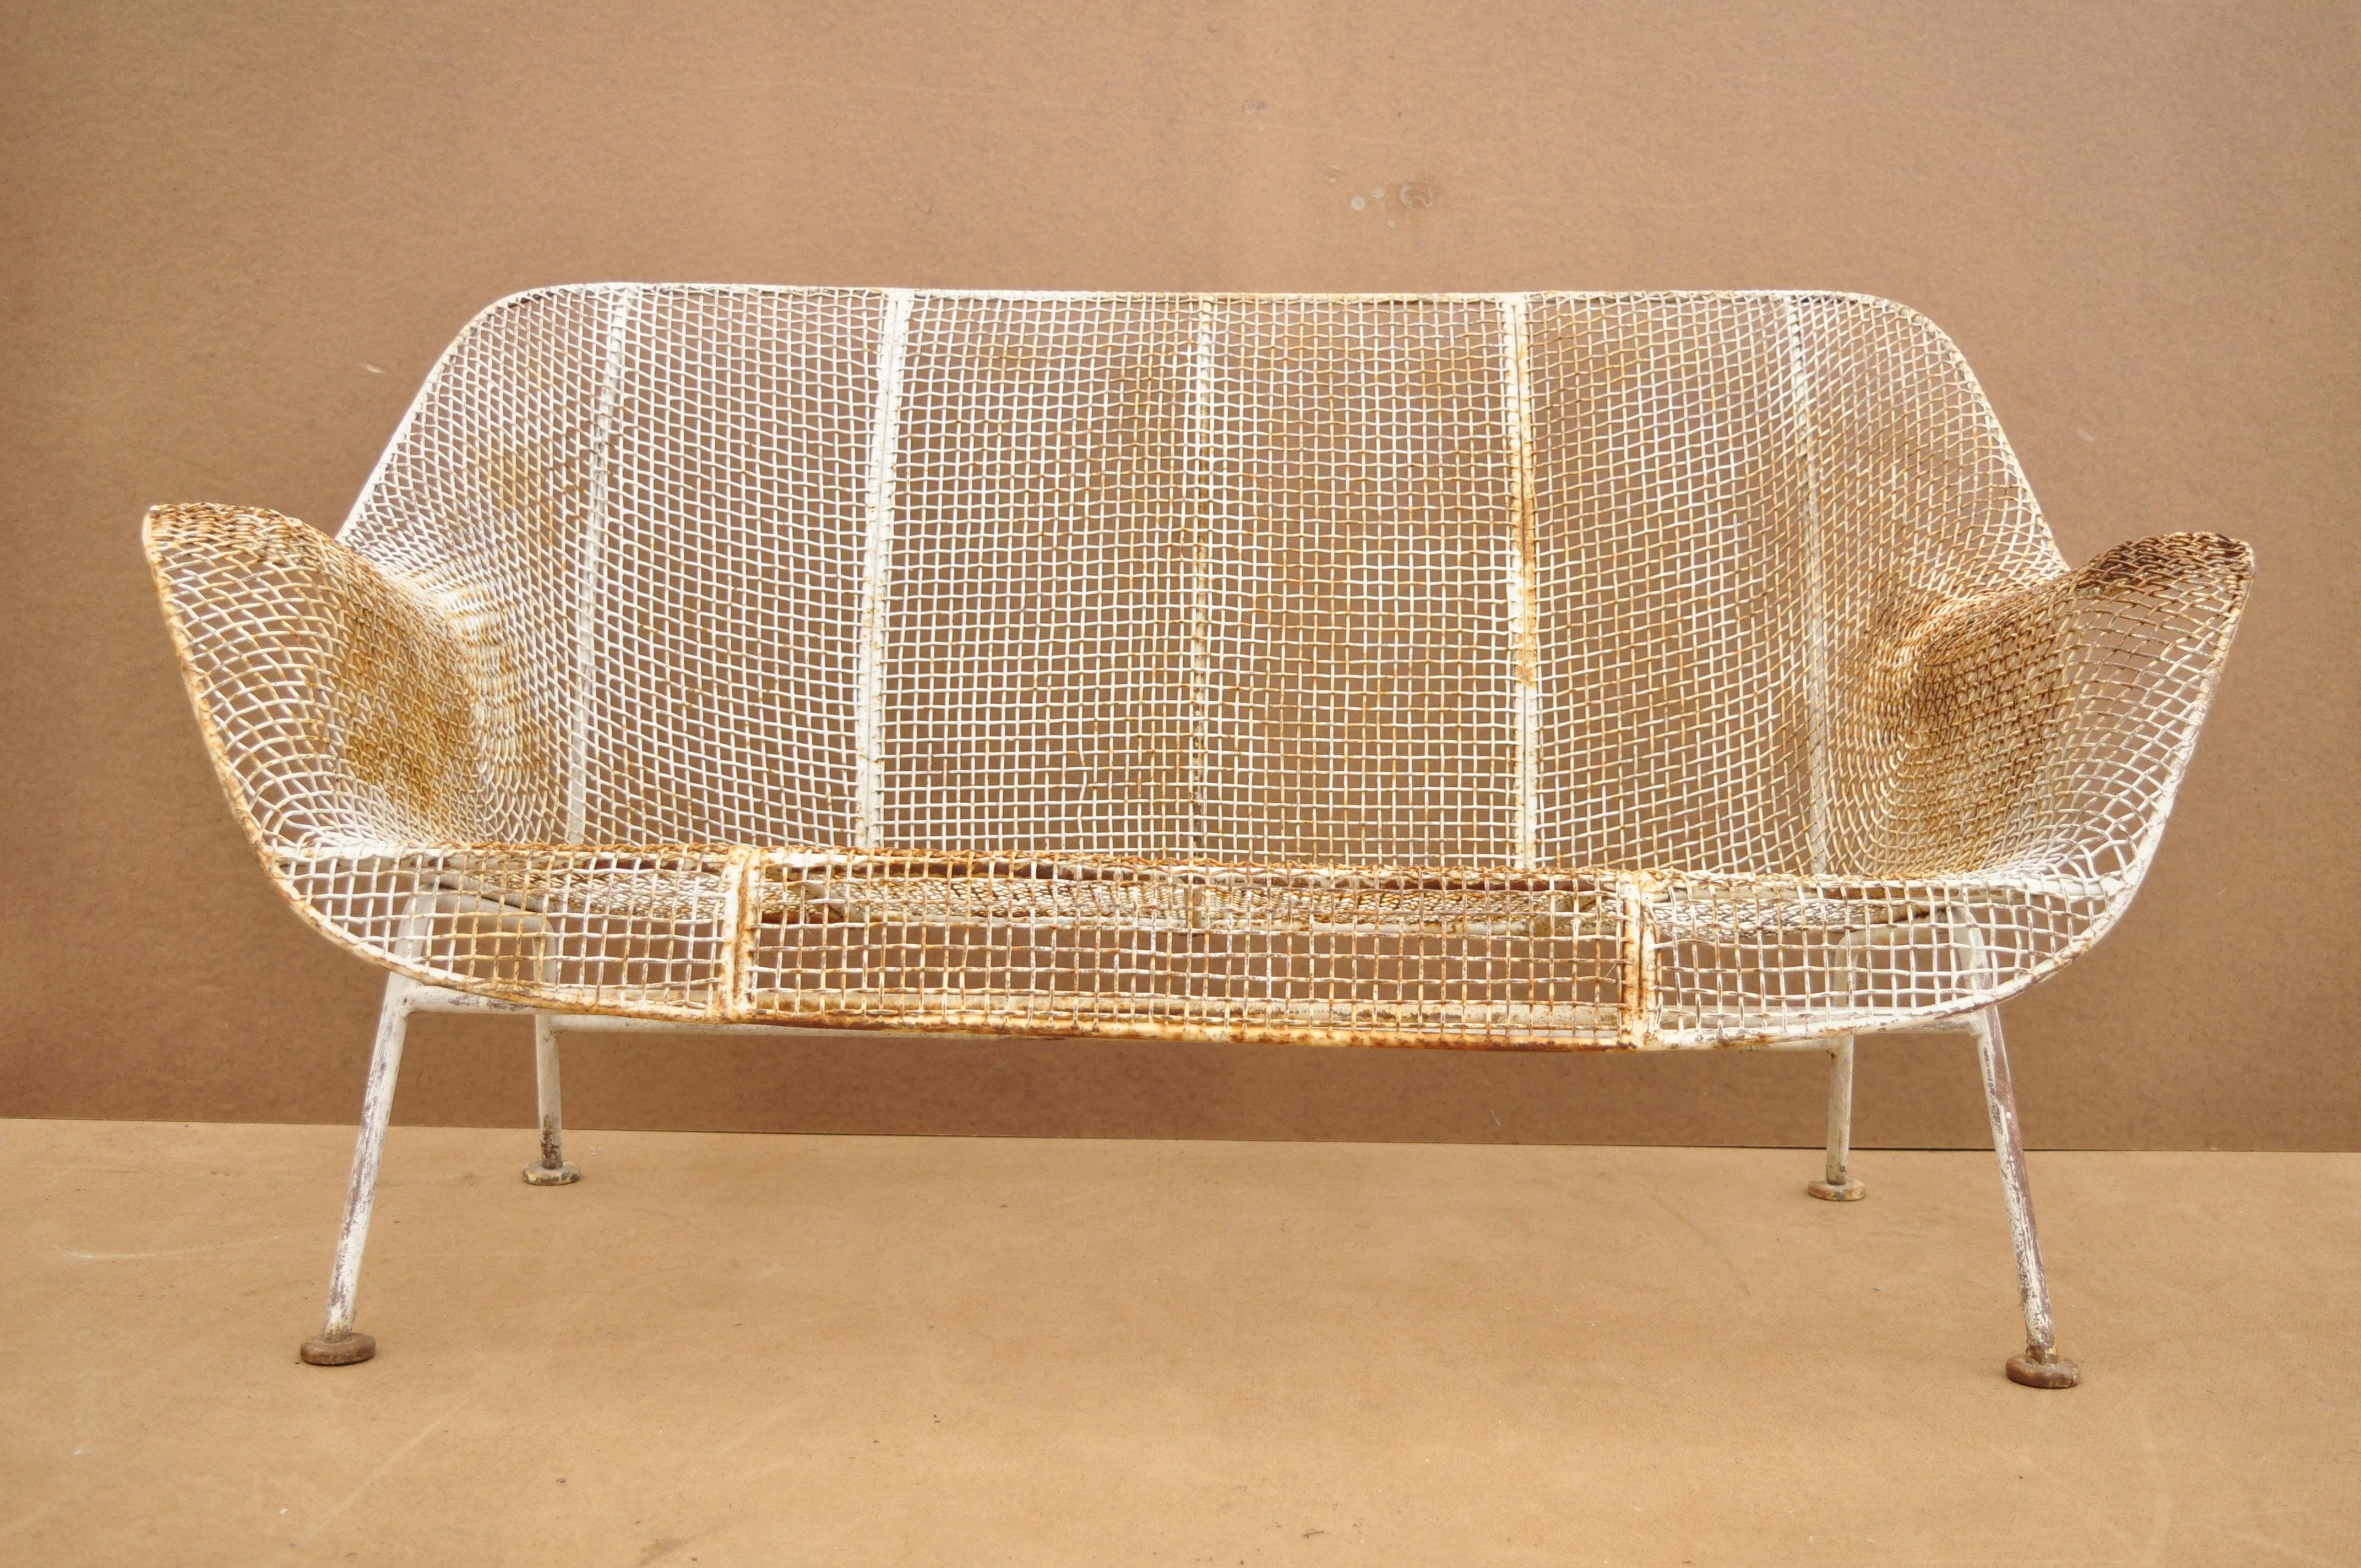 Vintage Russell Woodard Sculptura metal mesh wrought iron loveseat sofa. Item features iron frame, metal mesh seats, iconic Mid-Century Modern design, very nice vintage item, circa 1950. Measurements: 28